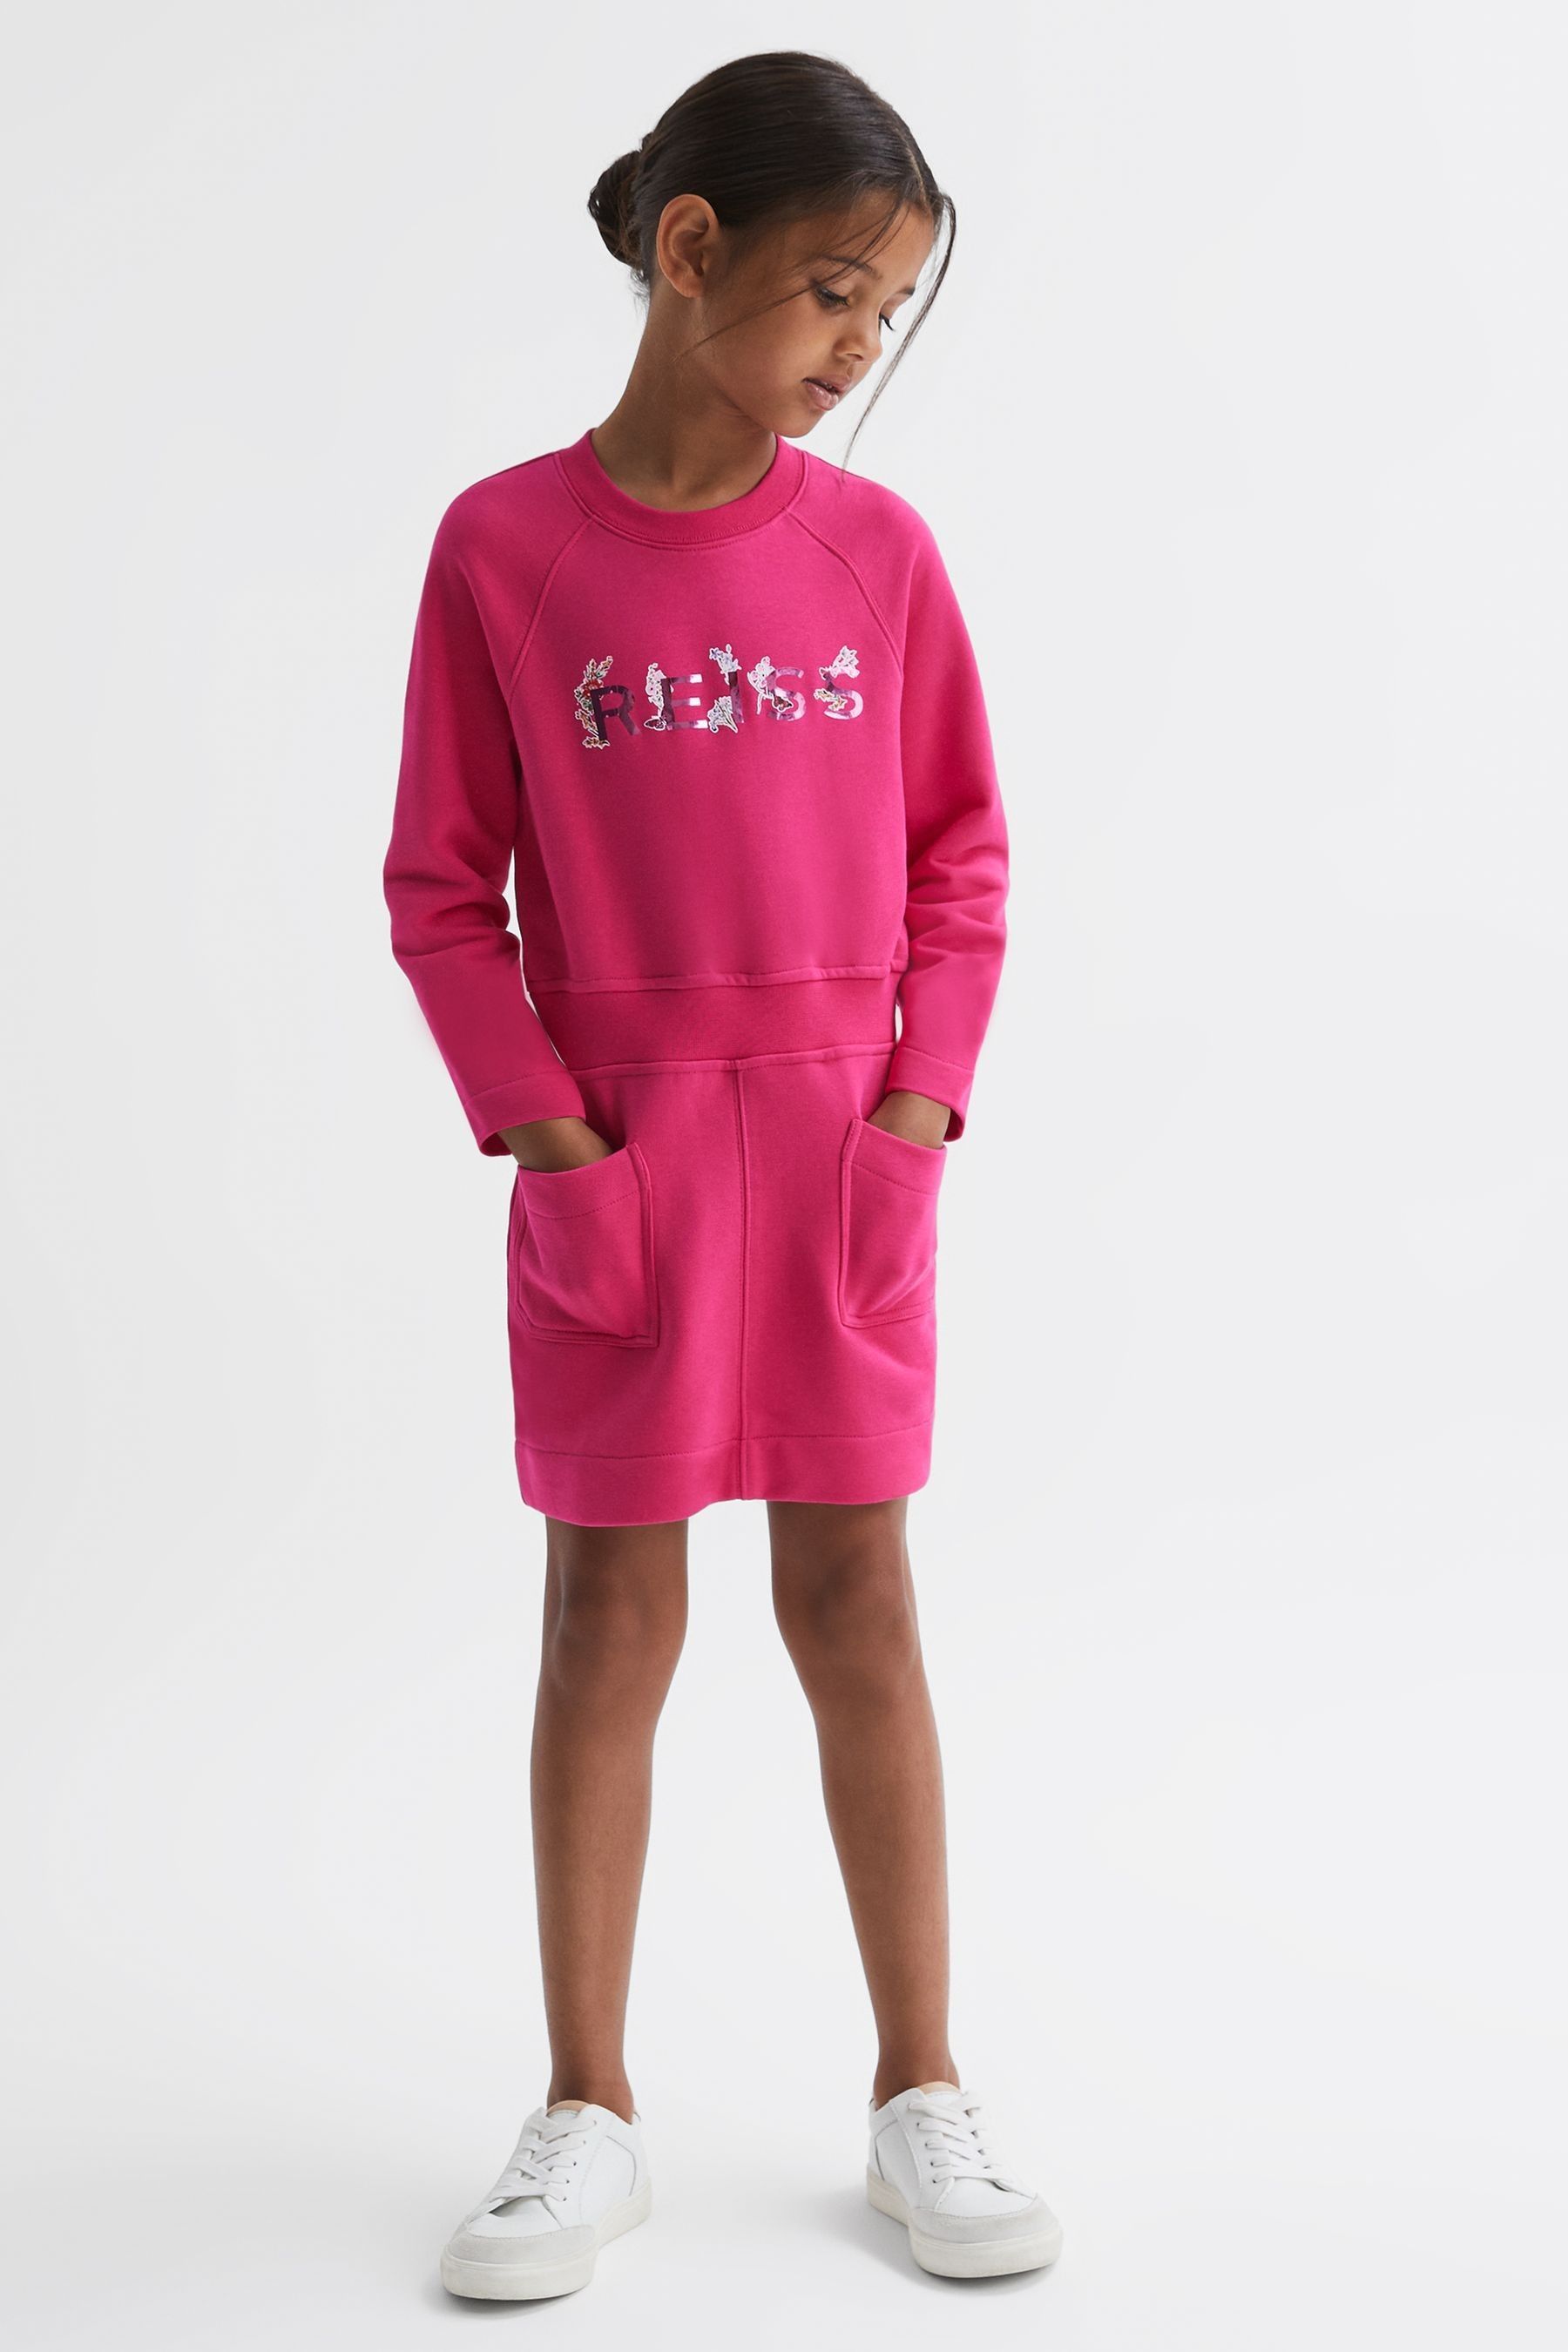 Reiss Kids' Janine - Pink Junior Sweatshirt Dress, Age 6-7 Years